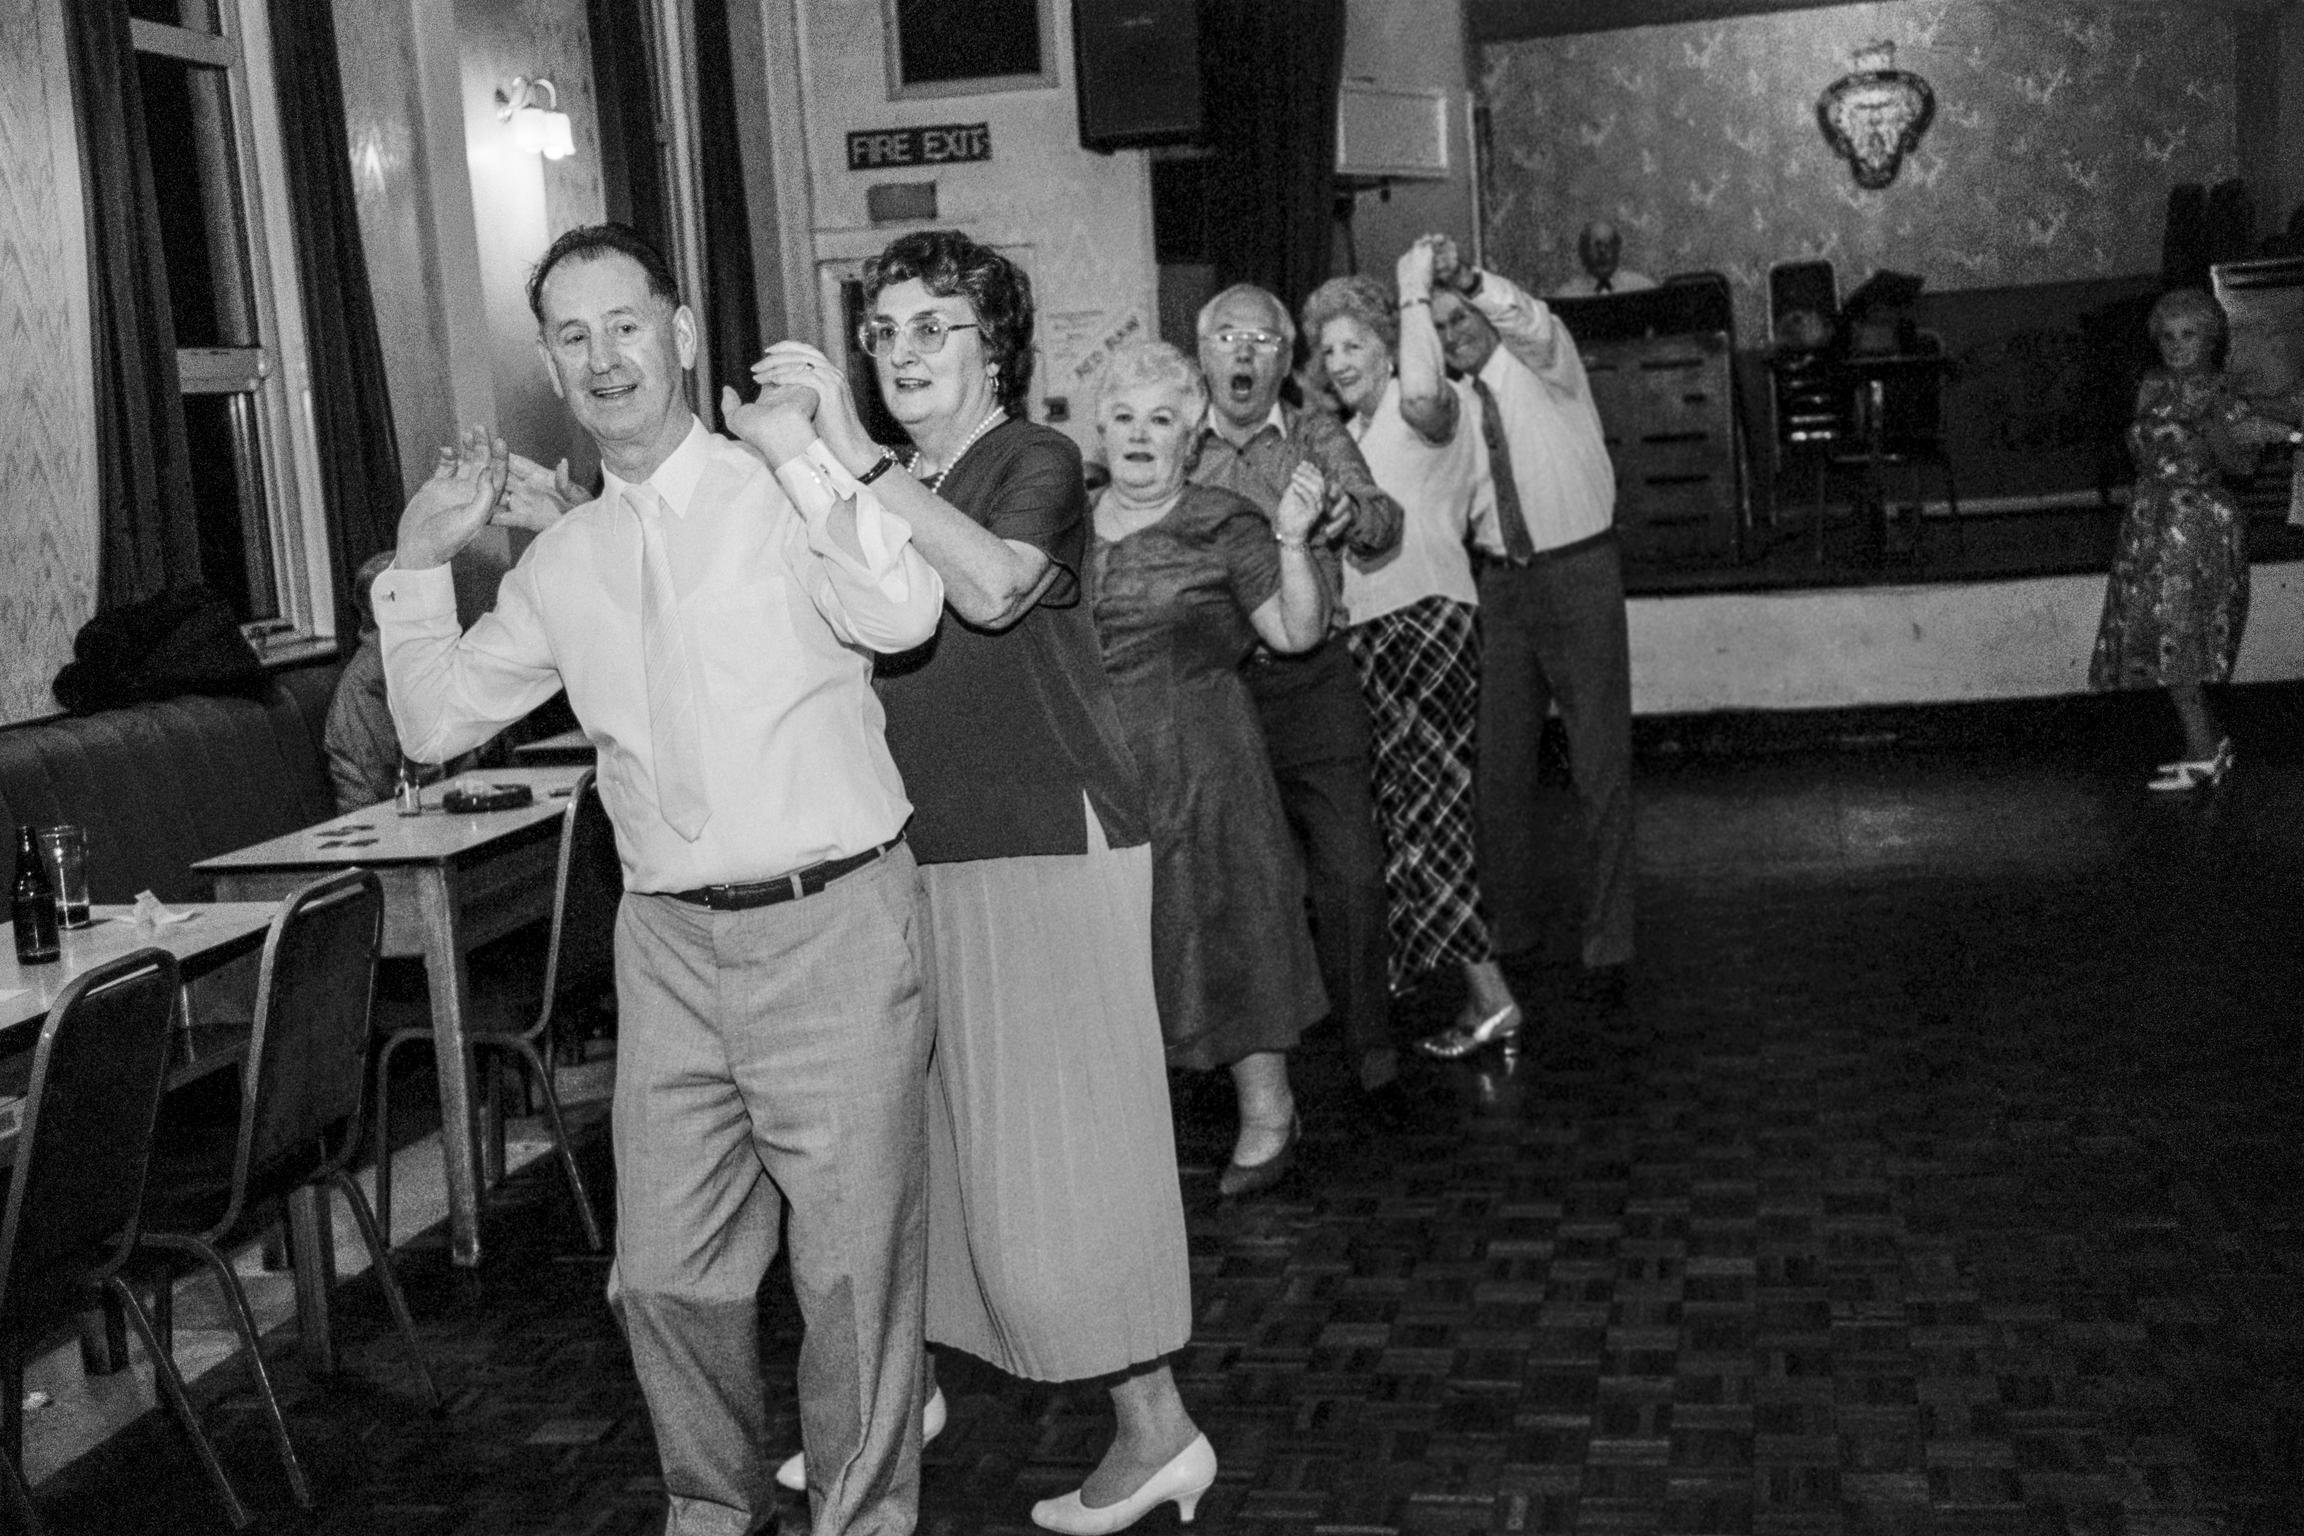 Old-time dancing in the British Legion Club. Cwm, Wales